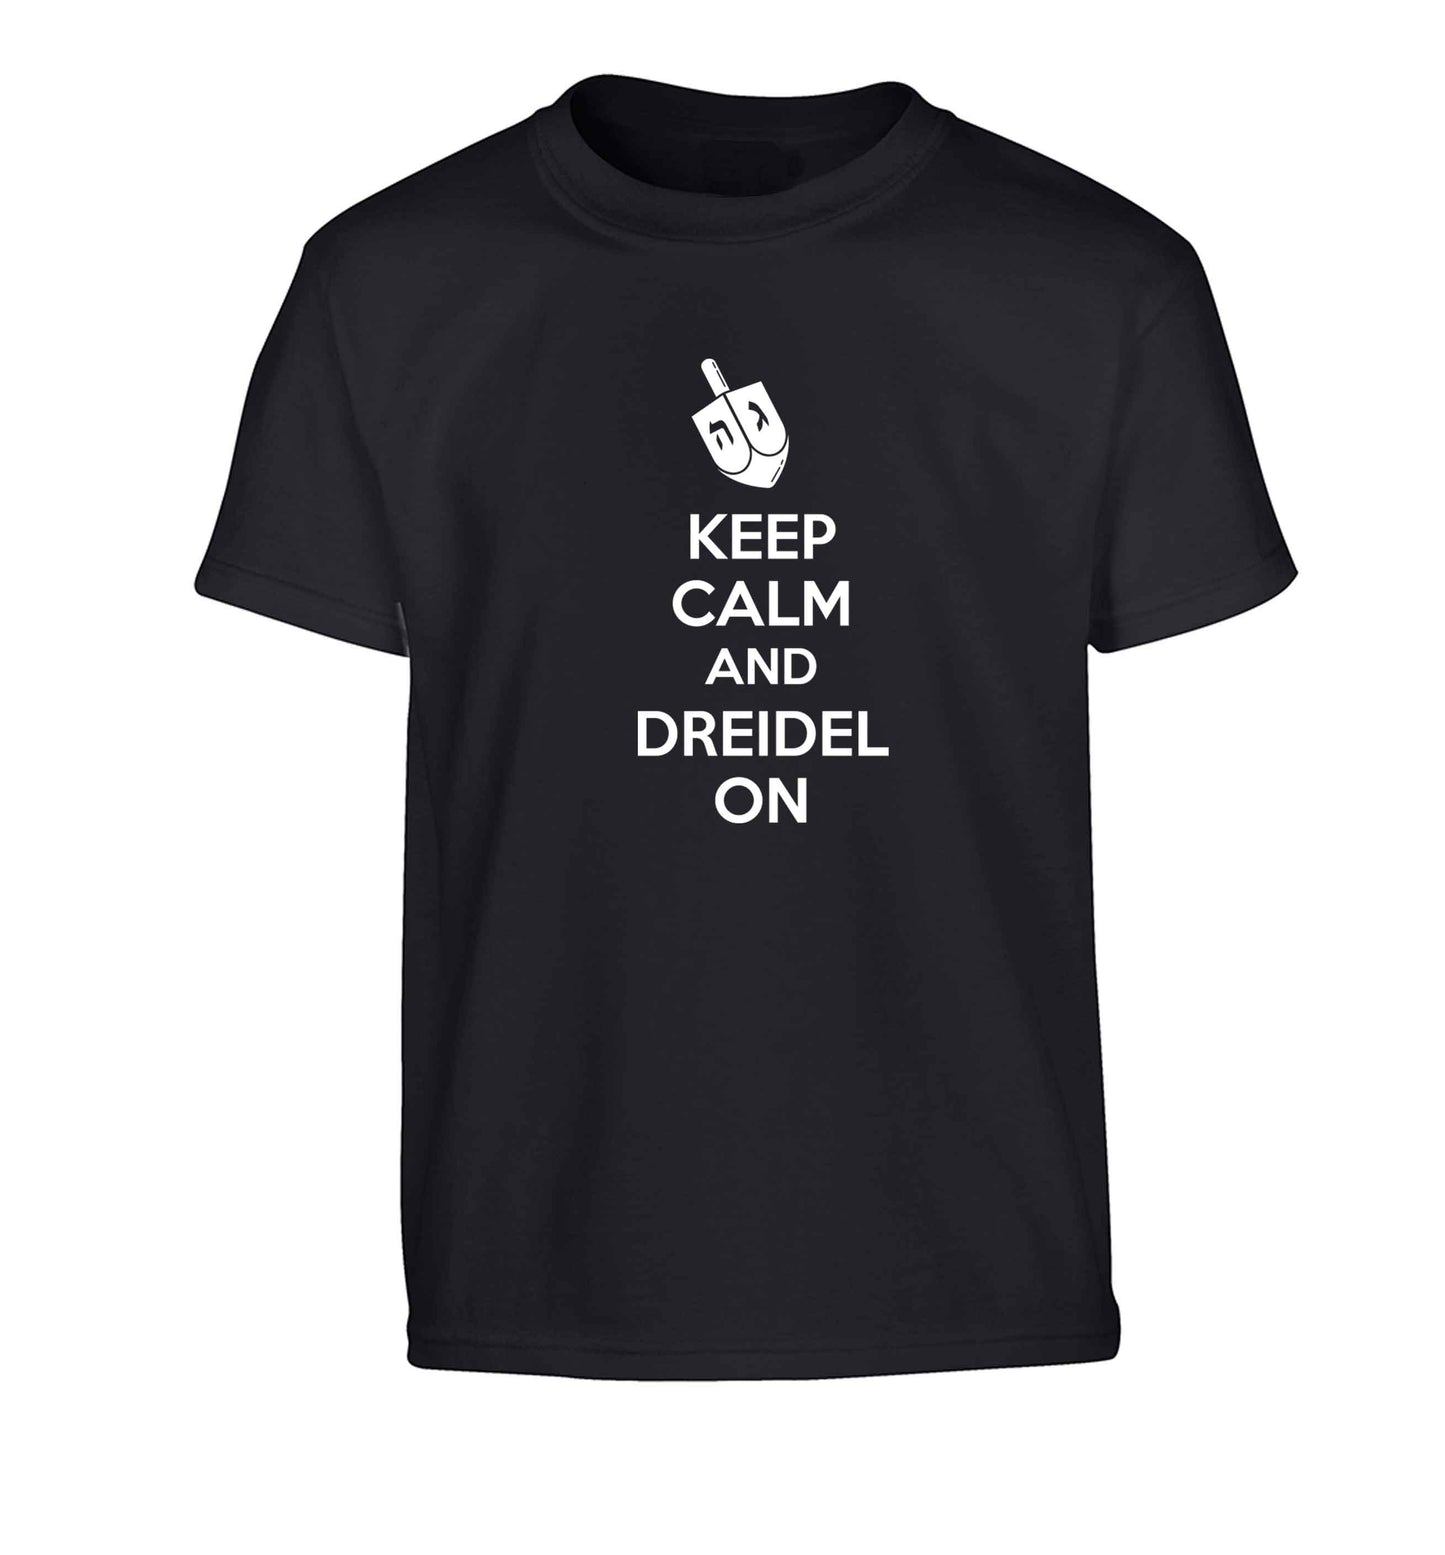 Keep calm and dreidel on Children's black Tshirt 12-13 Years